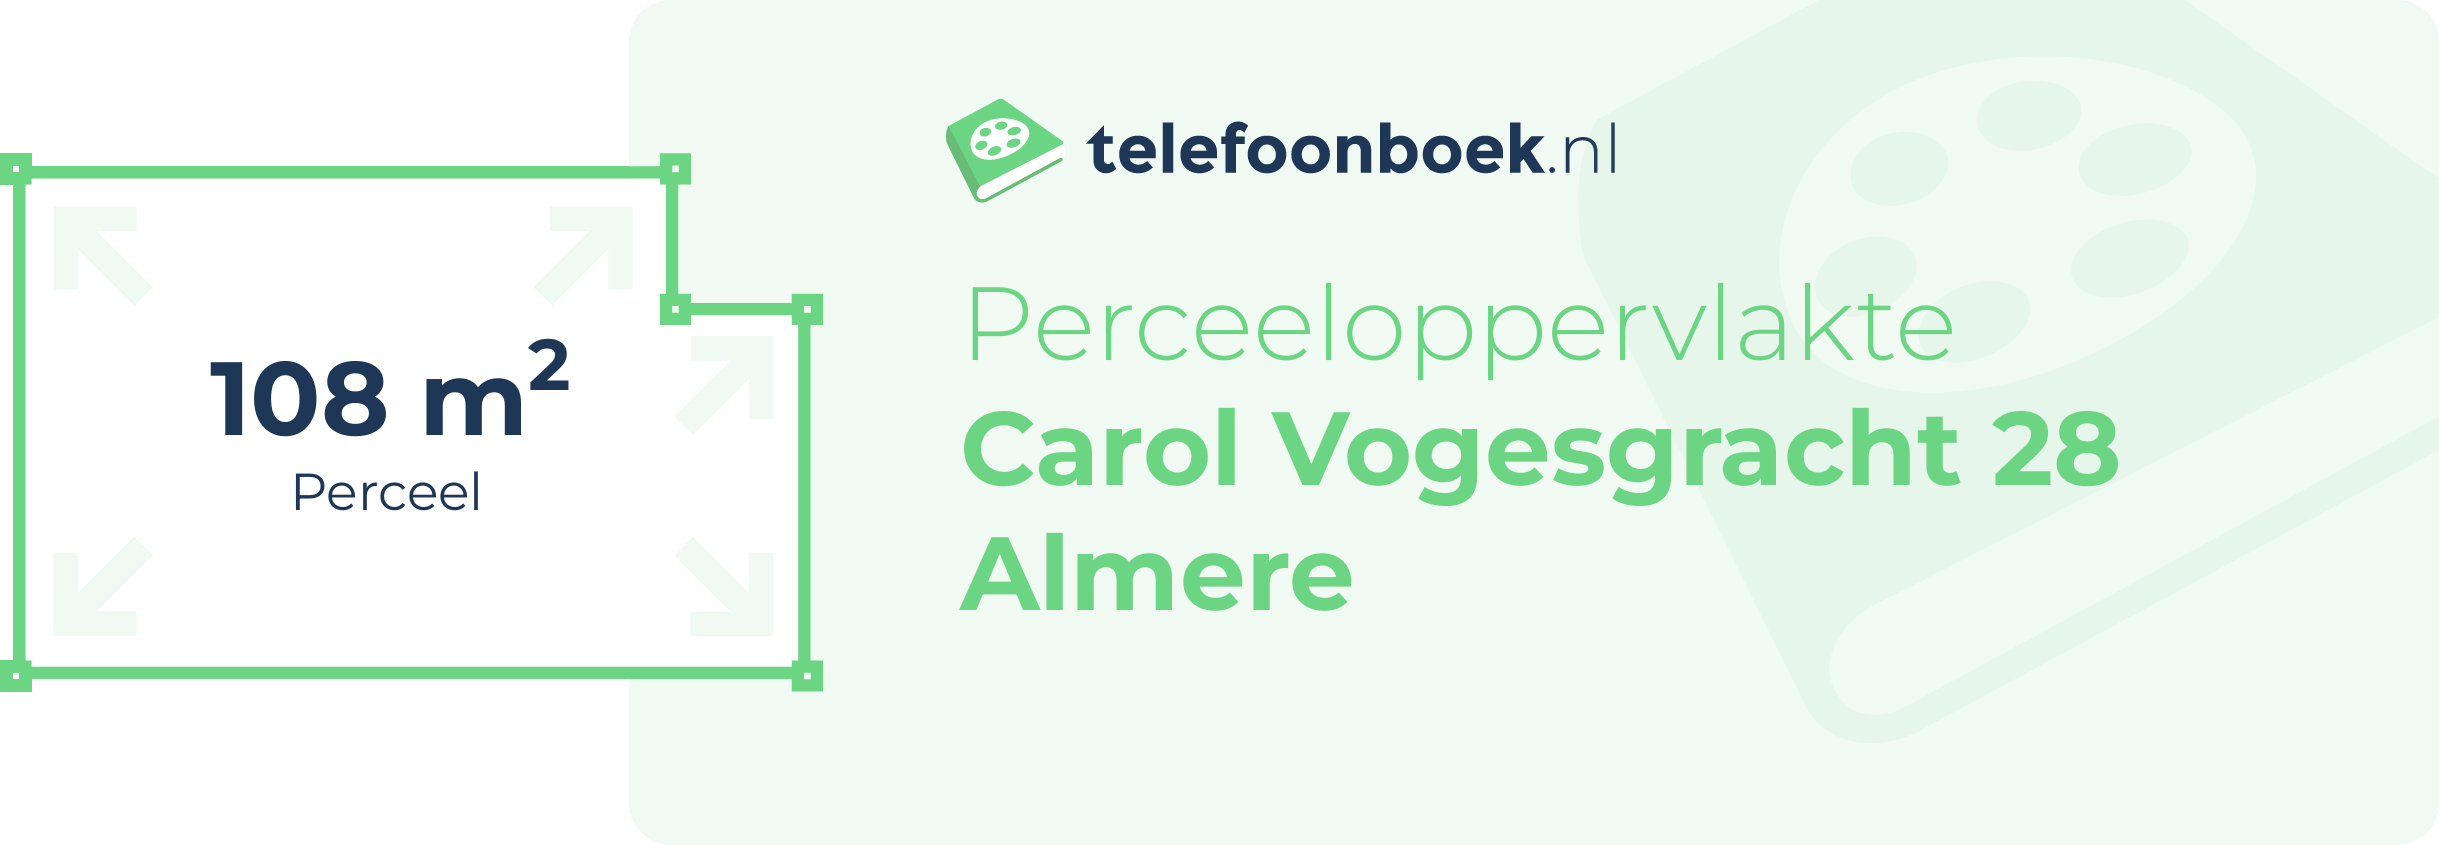 Perceeloppervlakte Carol Vogesgracht 28 Almere